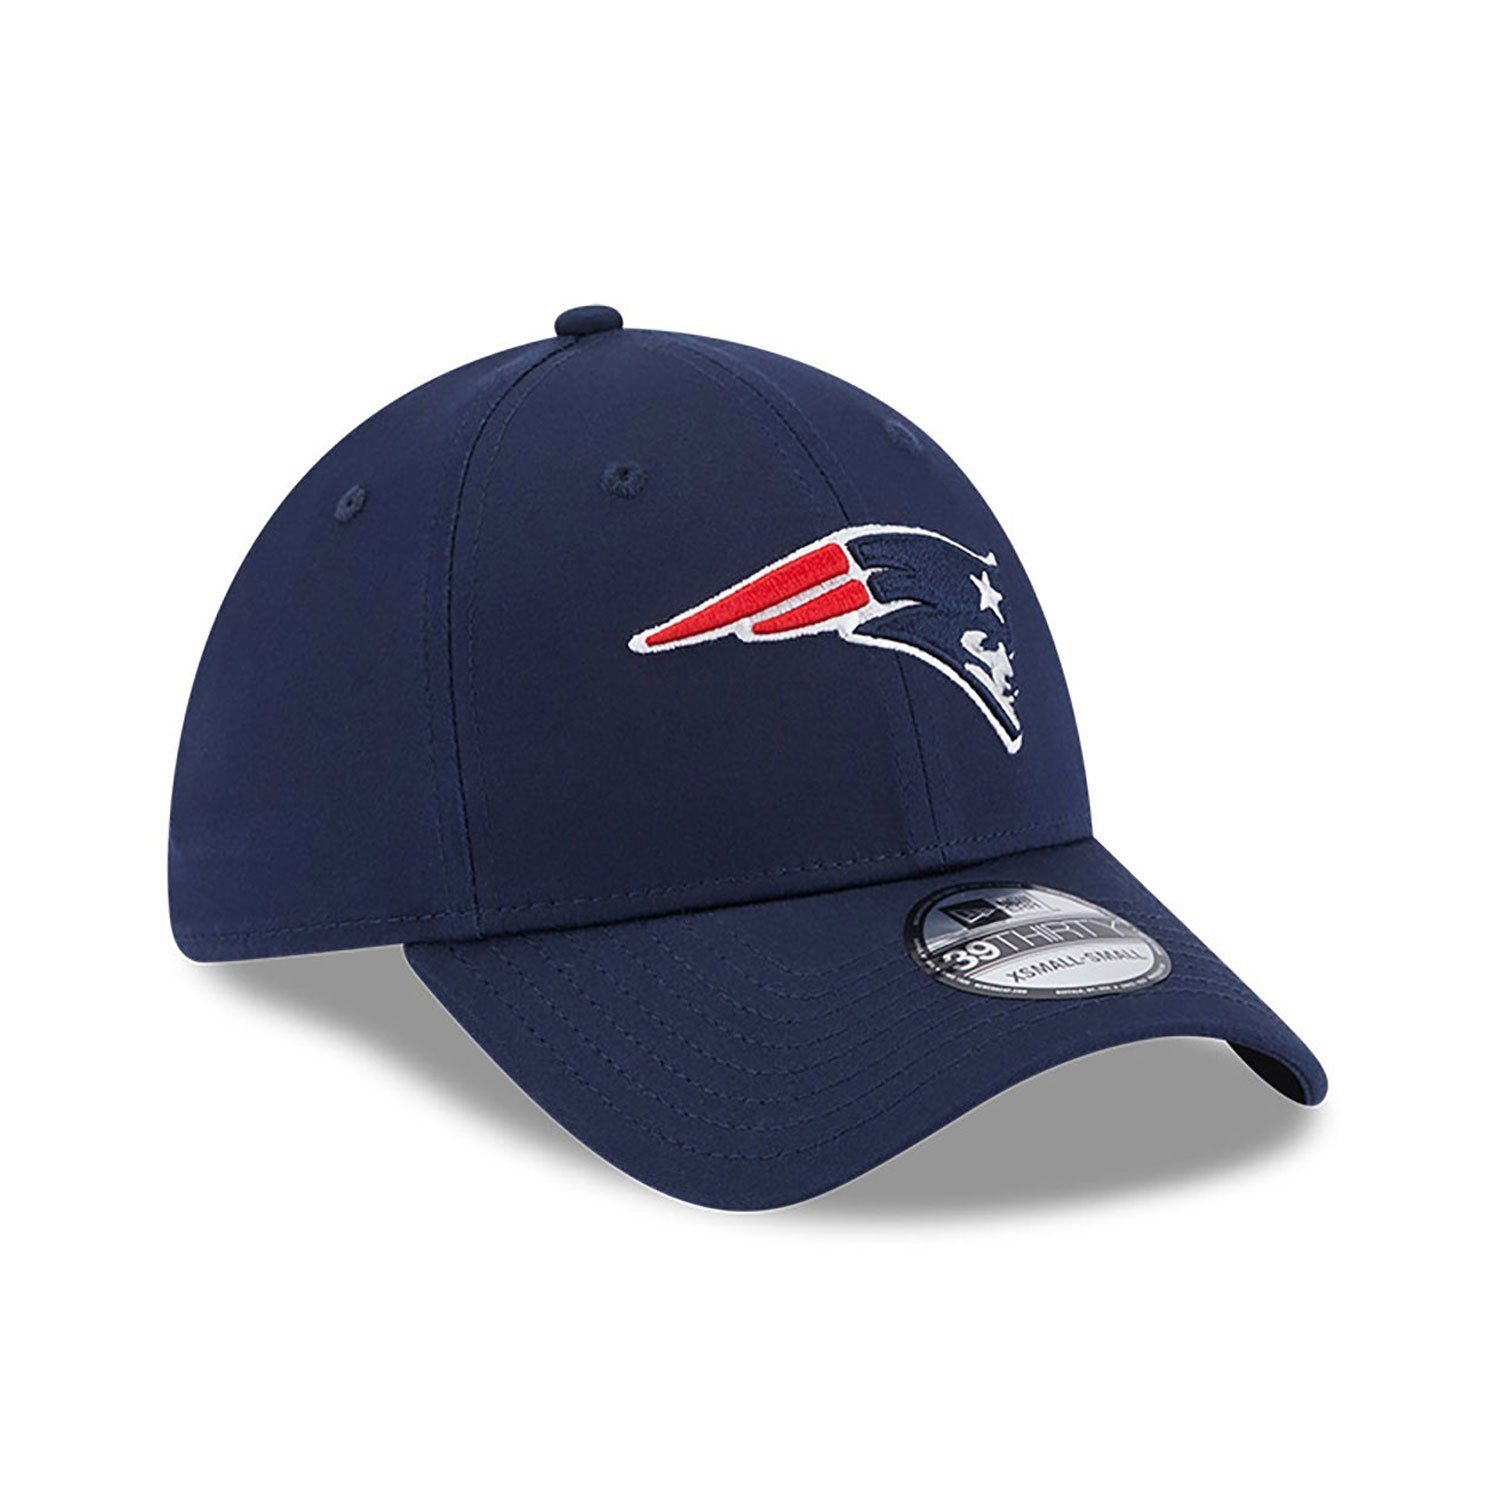 New New Patriots England Fitted Comfort blue 39THIRTY Era Cap Cap New Era